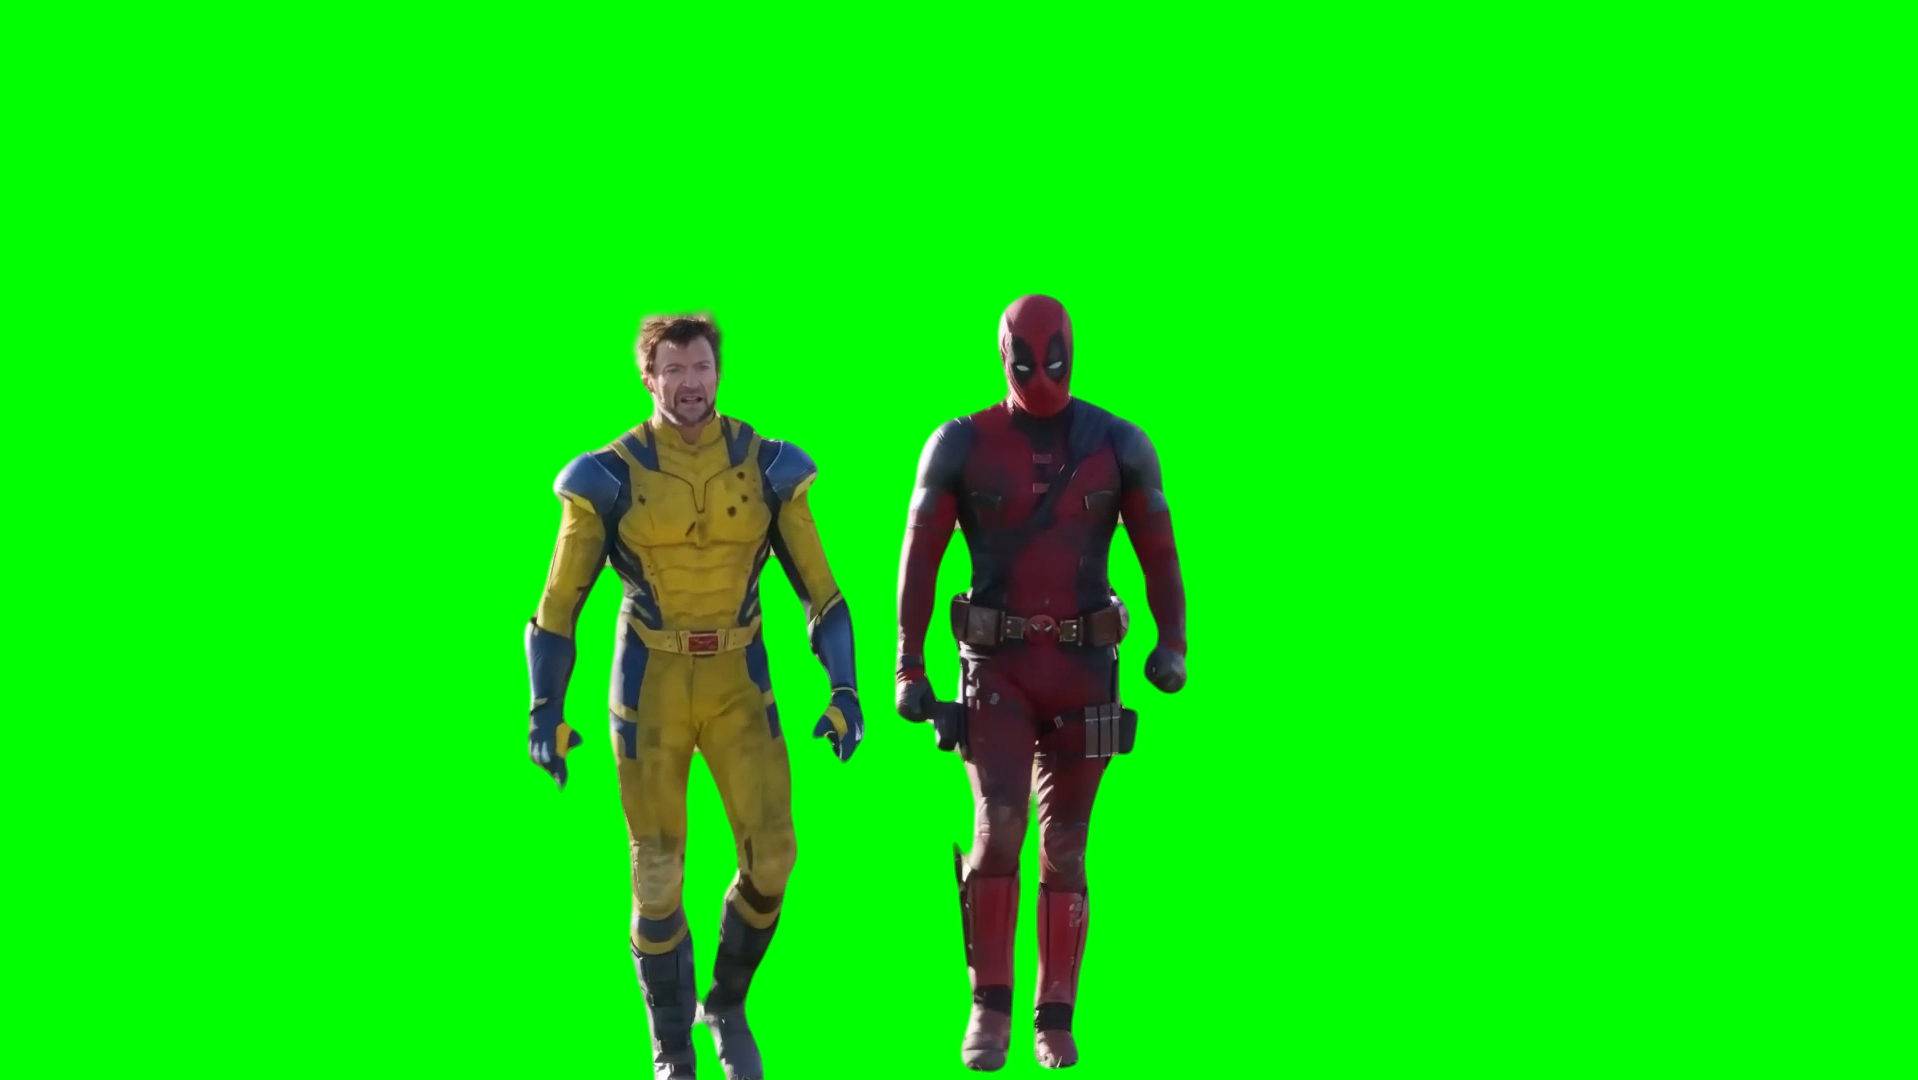 Deadpool and Wolverine Walking Together meme - Deadpool 3 (Green Screen)